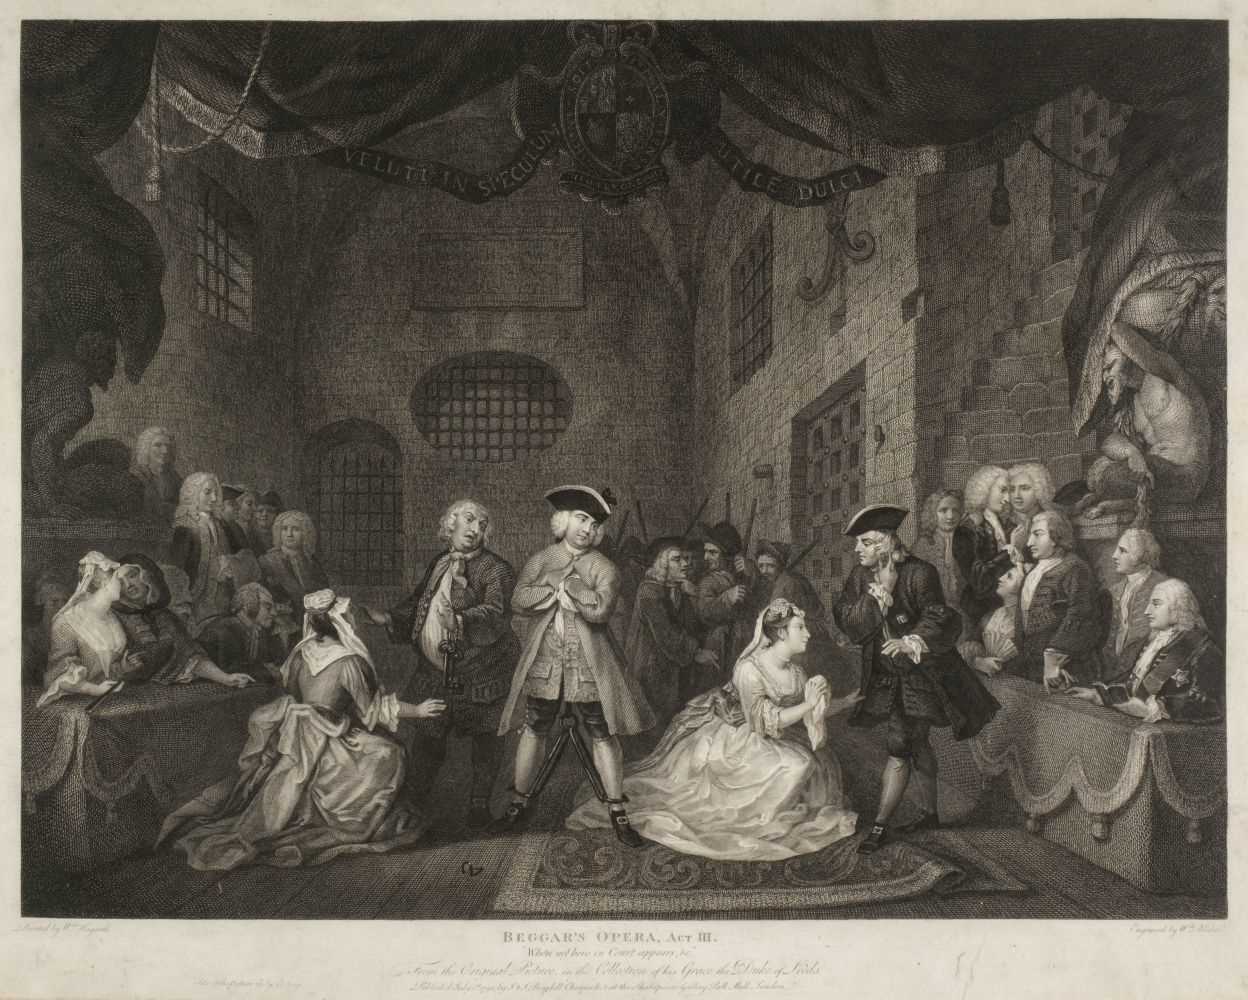 Lot 373 - Blake (William, 1757-1827). Beggar's Opera, Act III, 1790